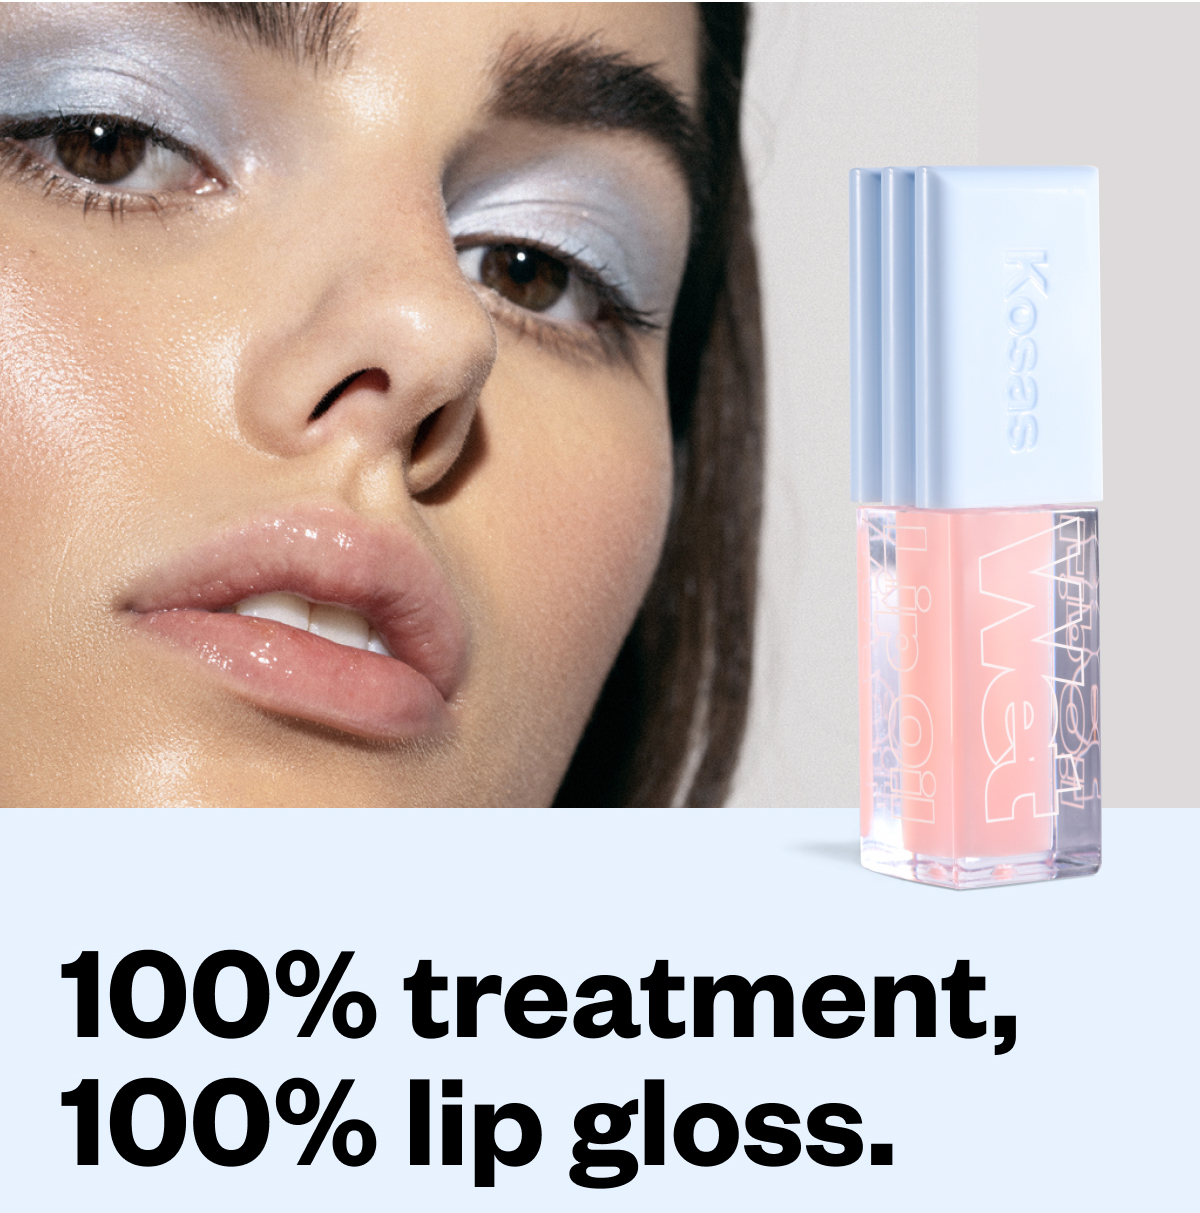 100% treatment, 100% gloss.